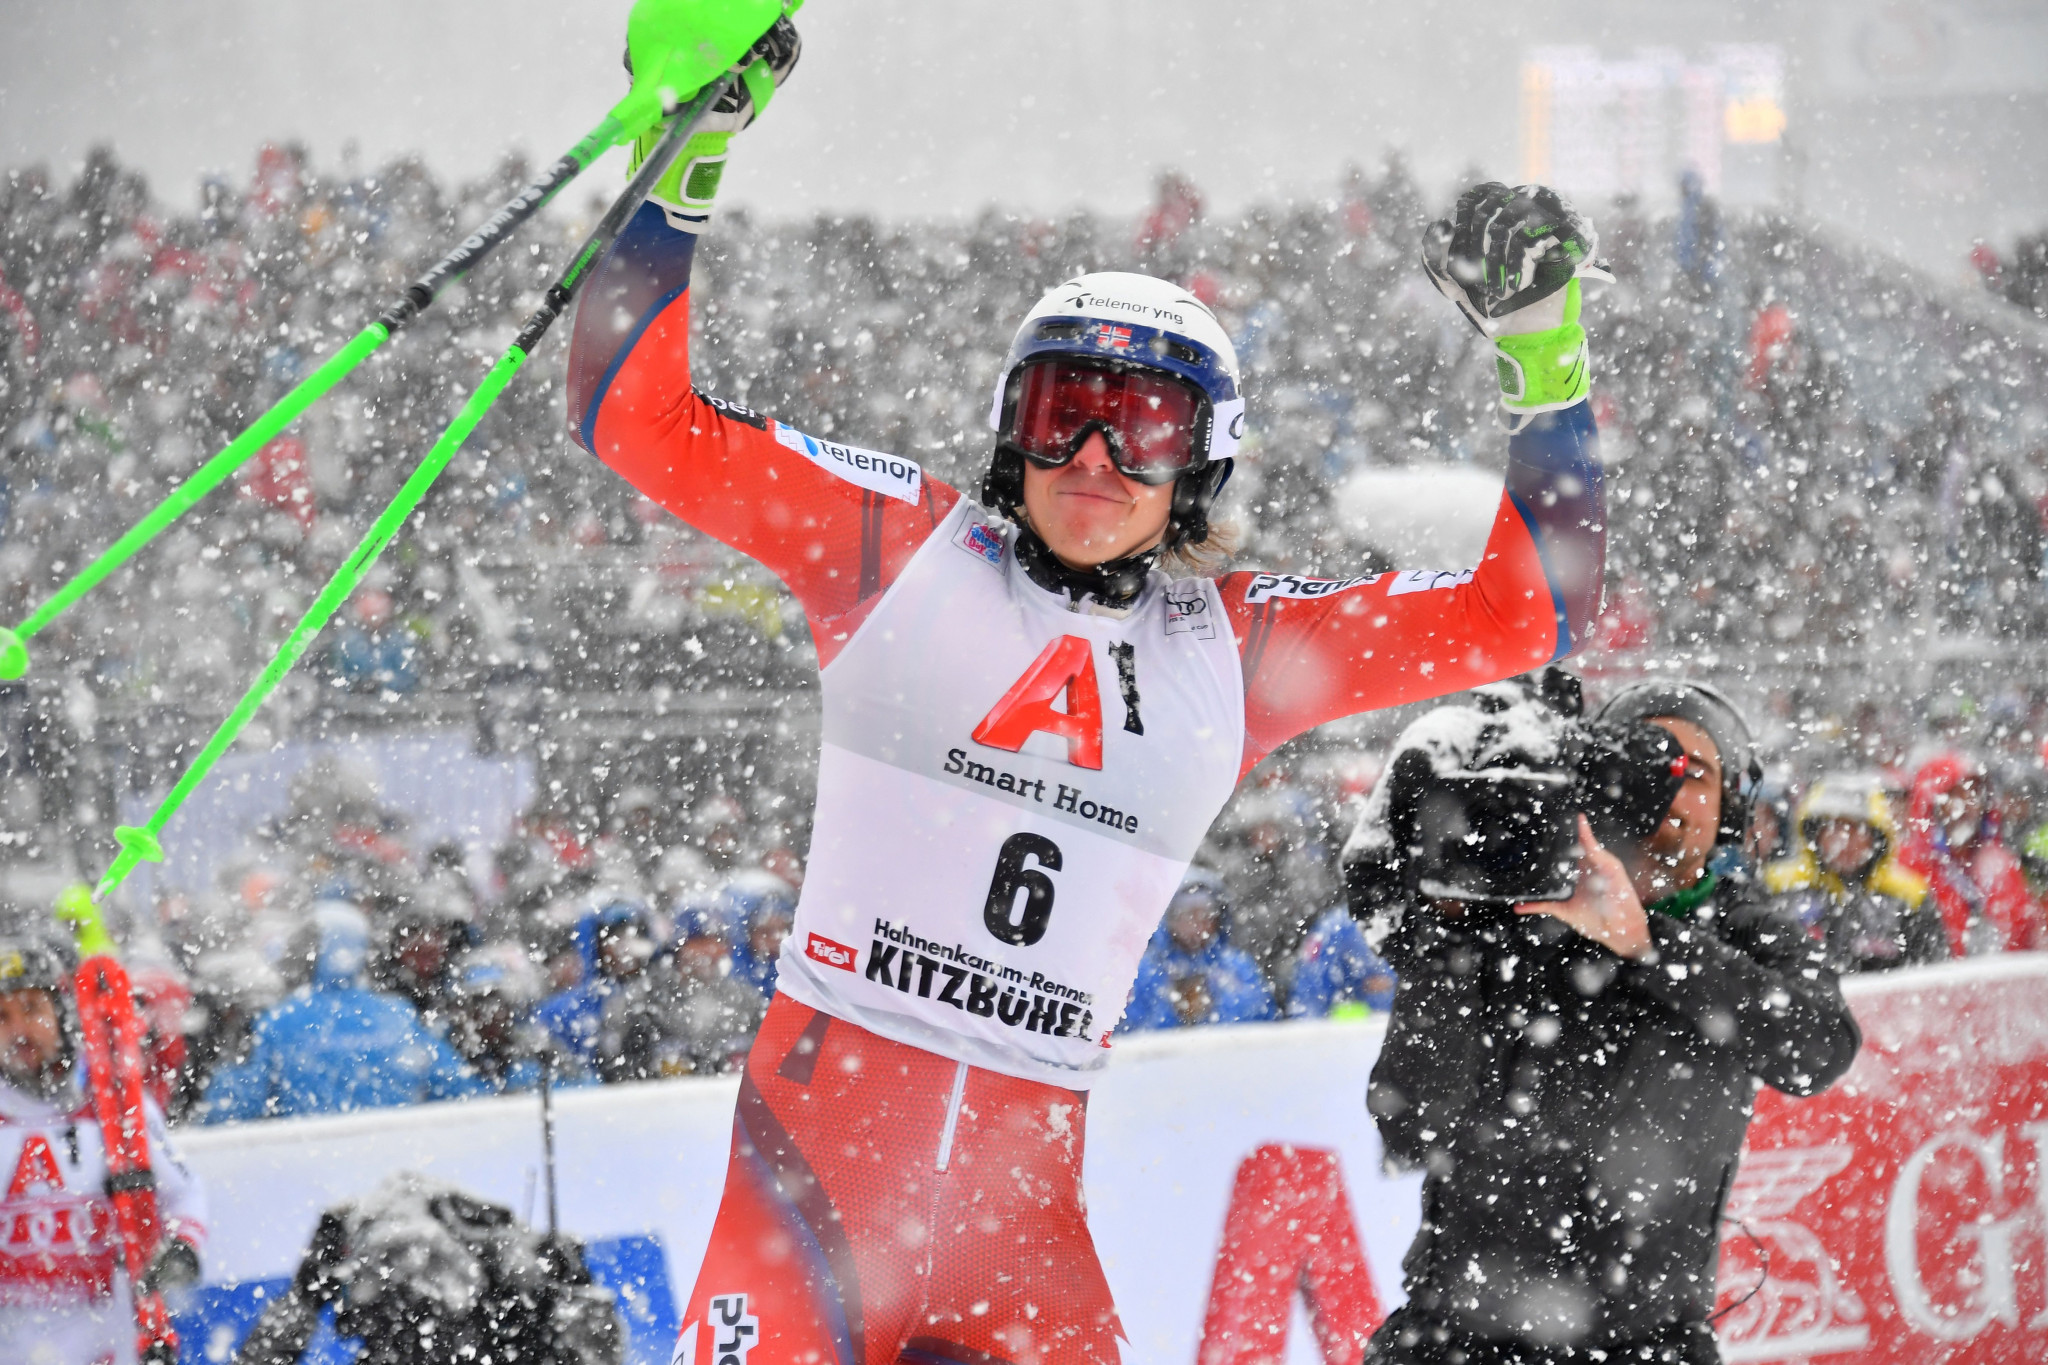 Kristoffersen shocks Hirscher to claim first slalom title of the season at FIS Alpine Skiing World Cup in Kitzbühel